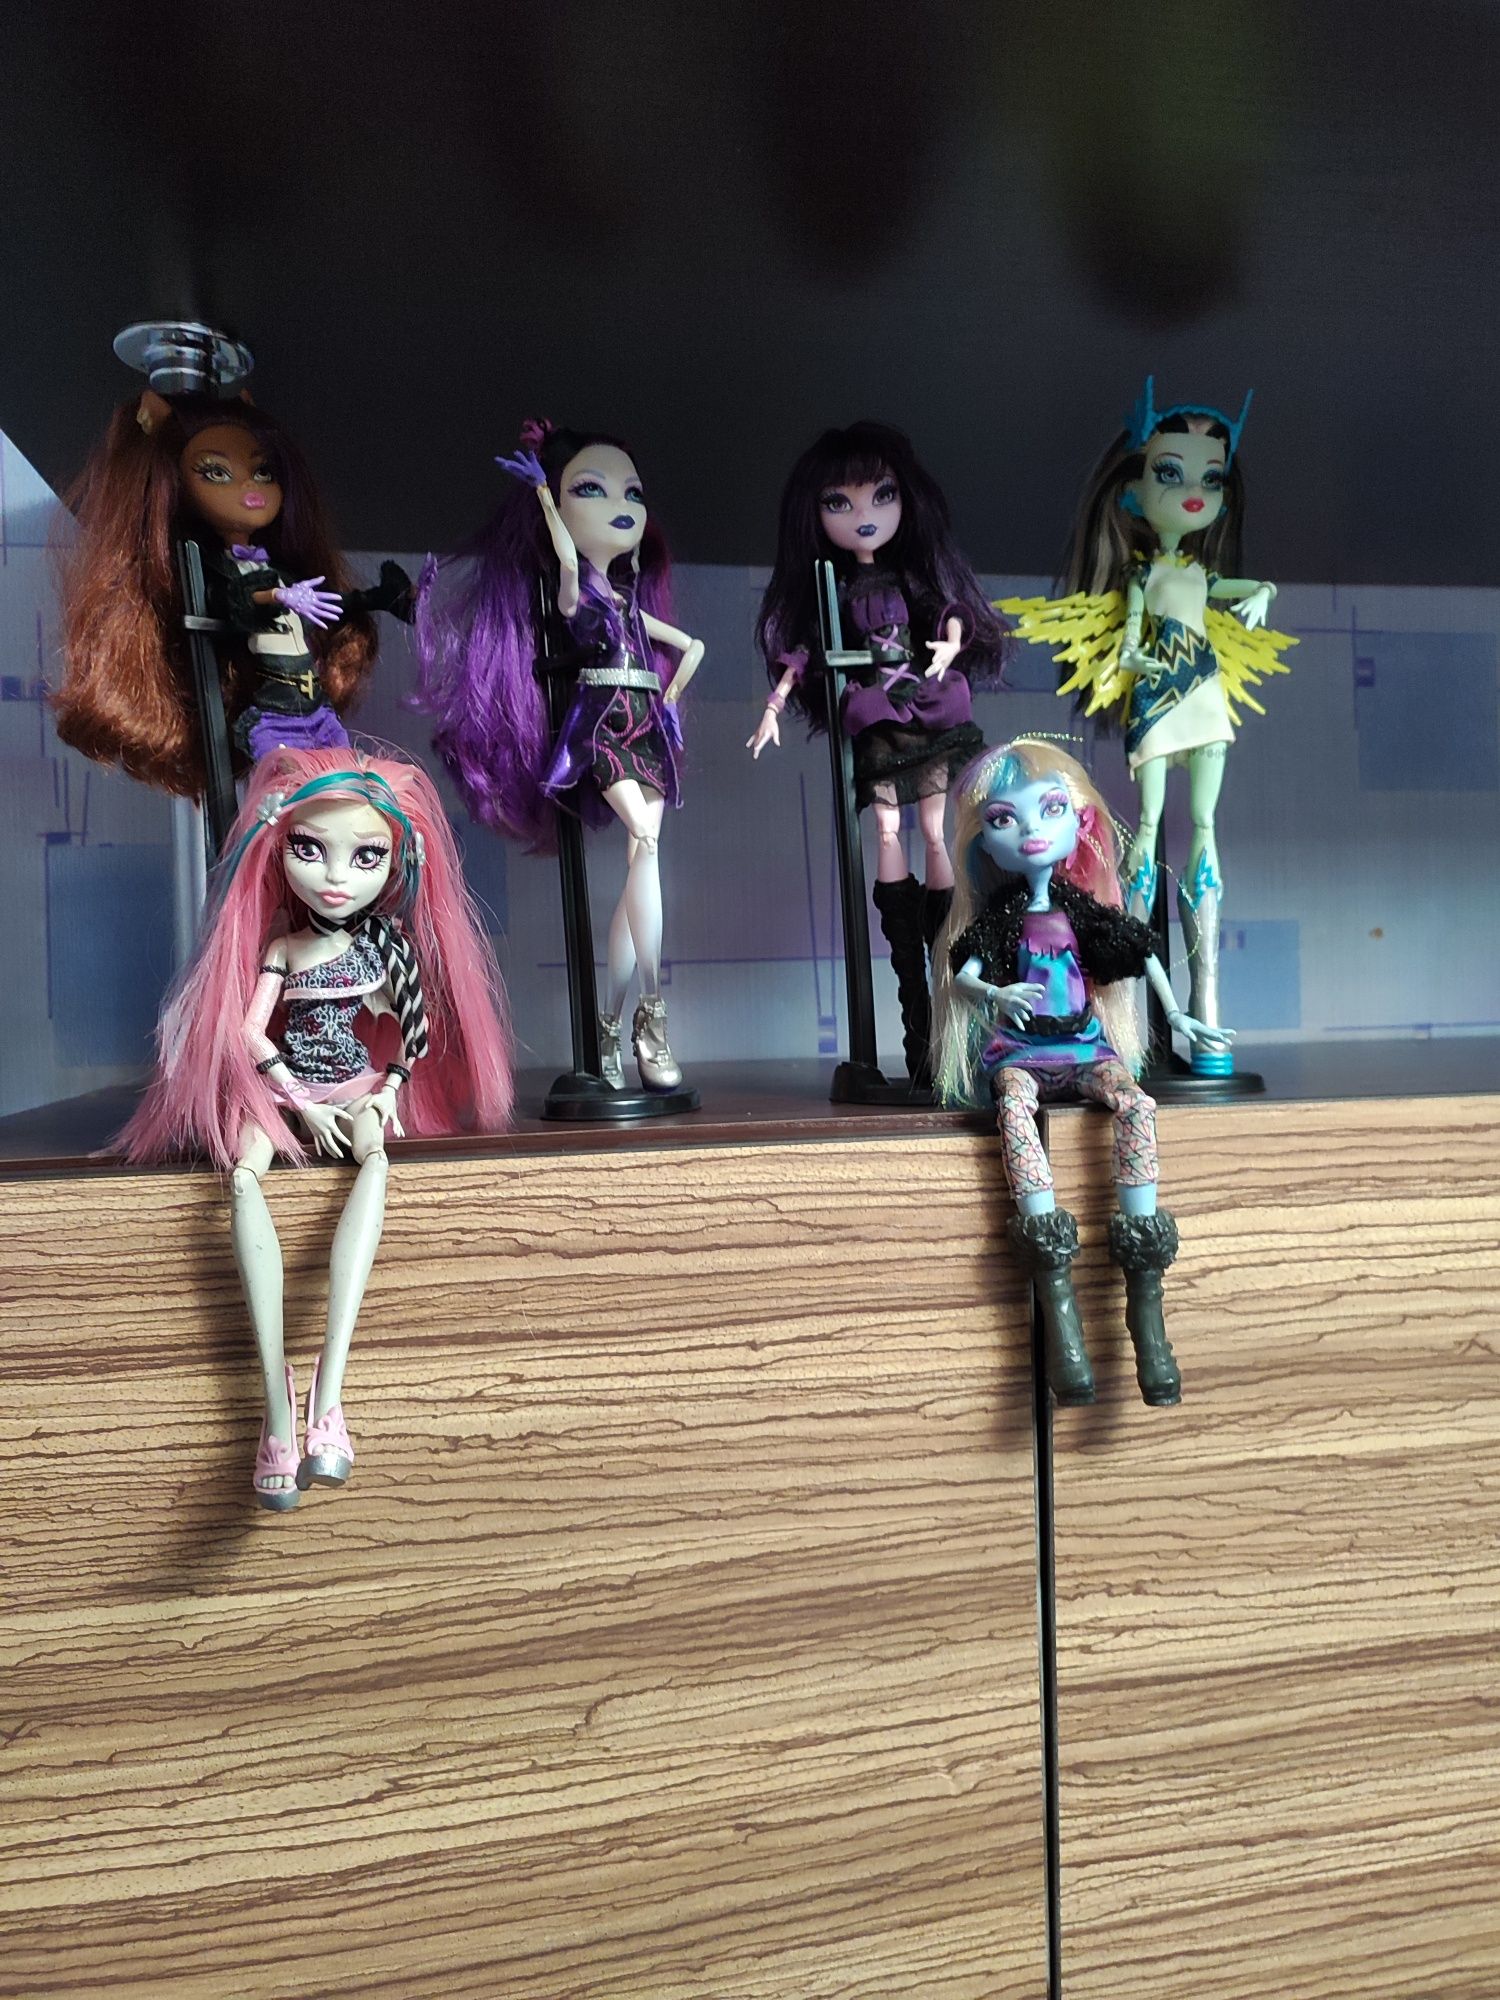 Оригинальные куклы  Monster high Френки, Клодин, Спектра, Элизабет,